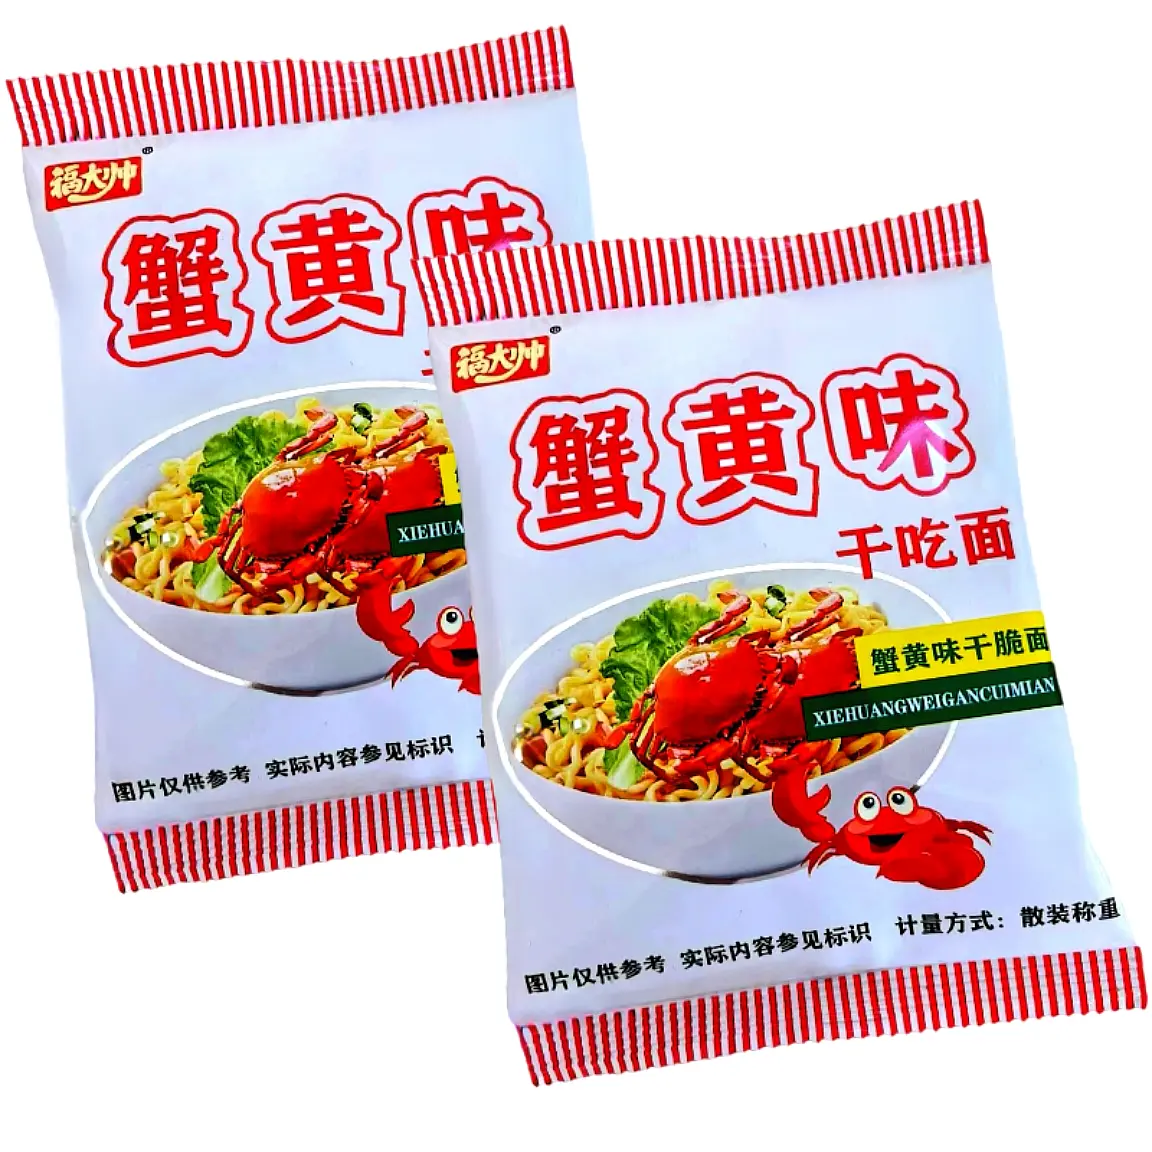 Wholesale Chinese Instant Noodles Crispy Crab Roe Flavor Instant Noodles Delicious Noodles Instant